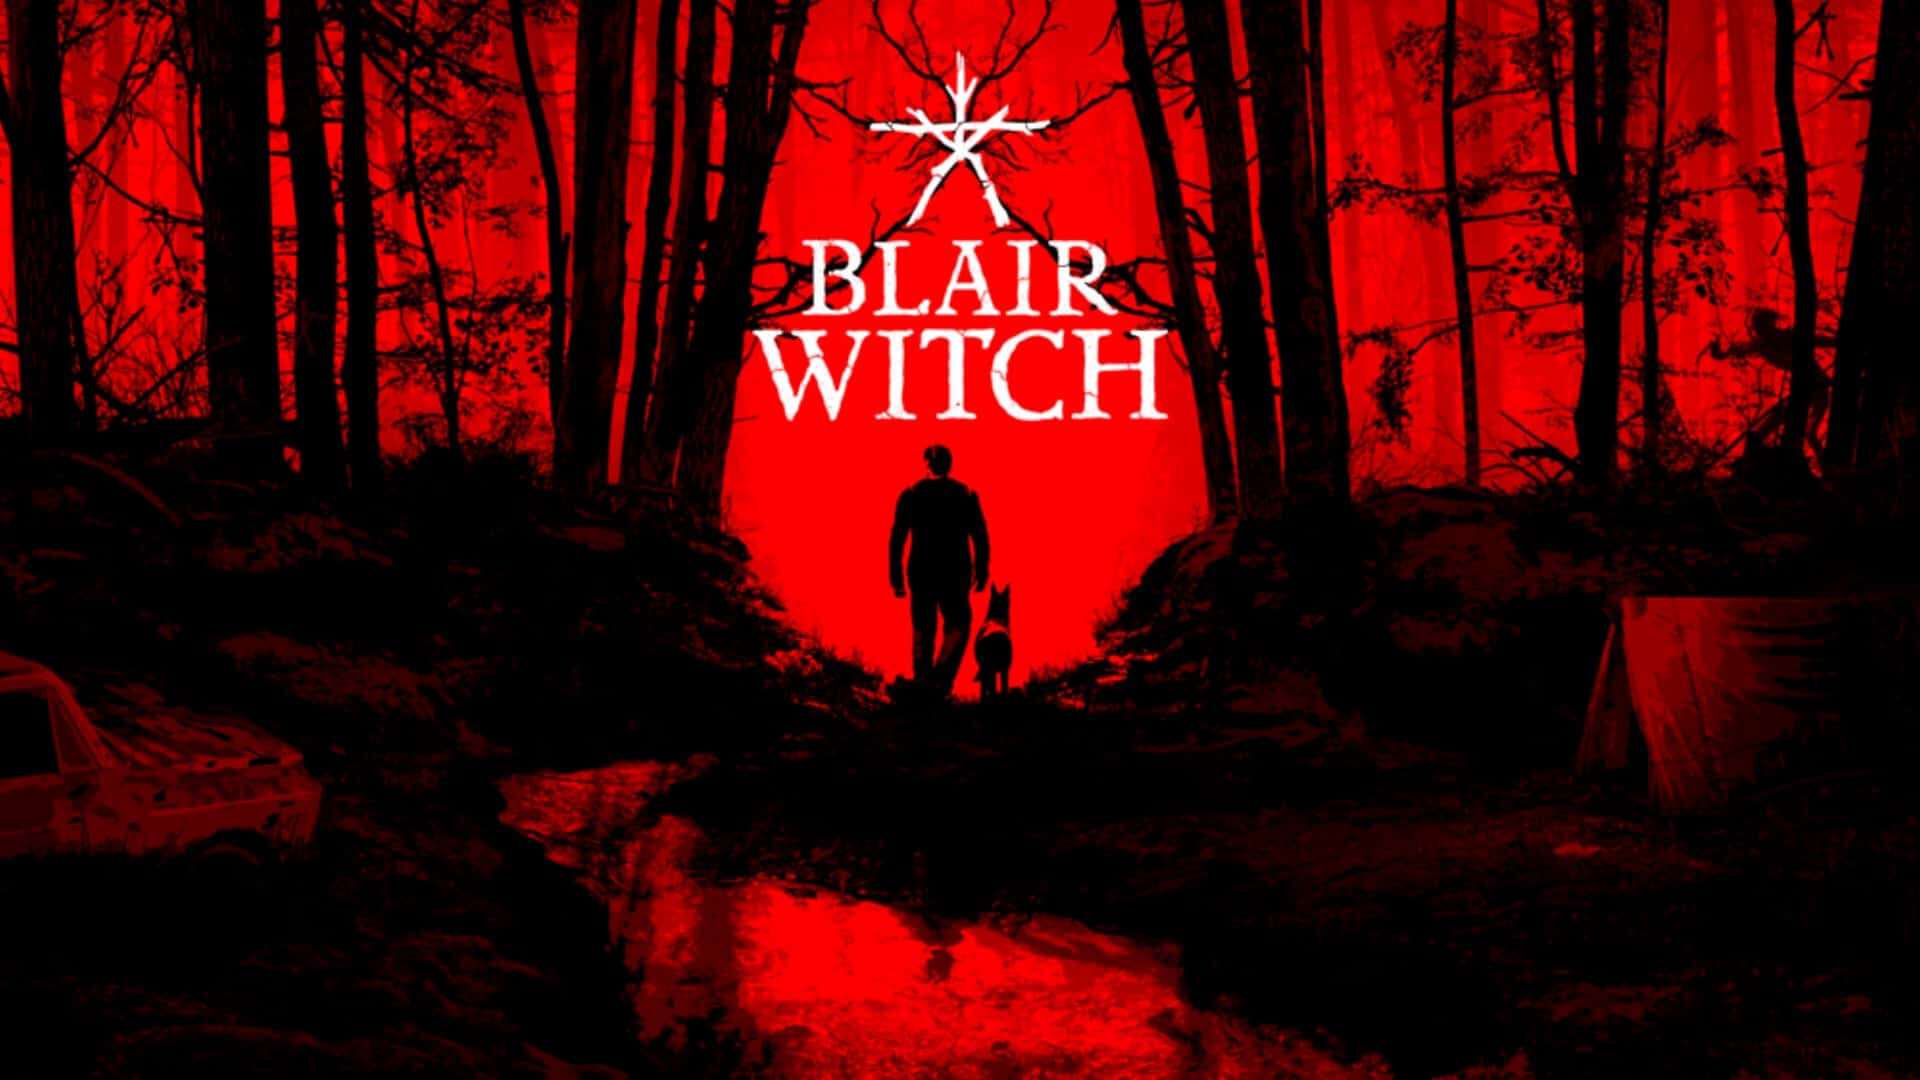 Blair witch trailer